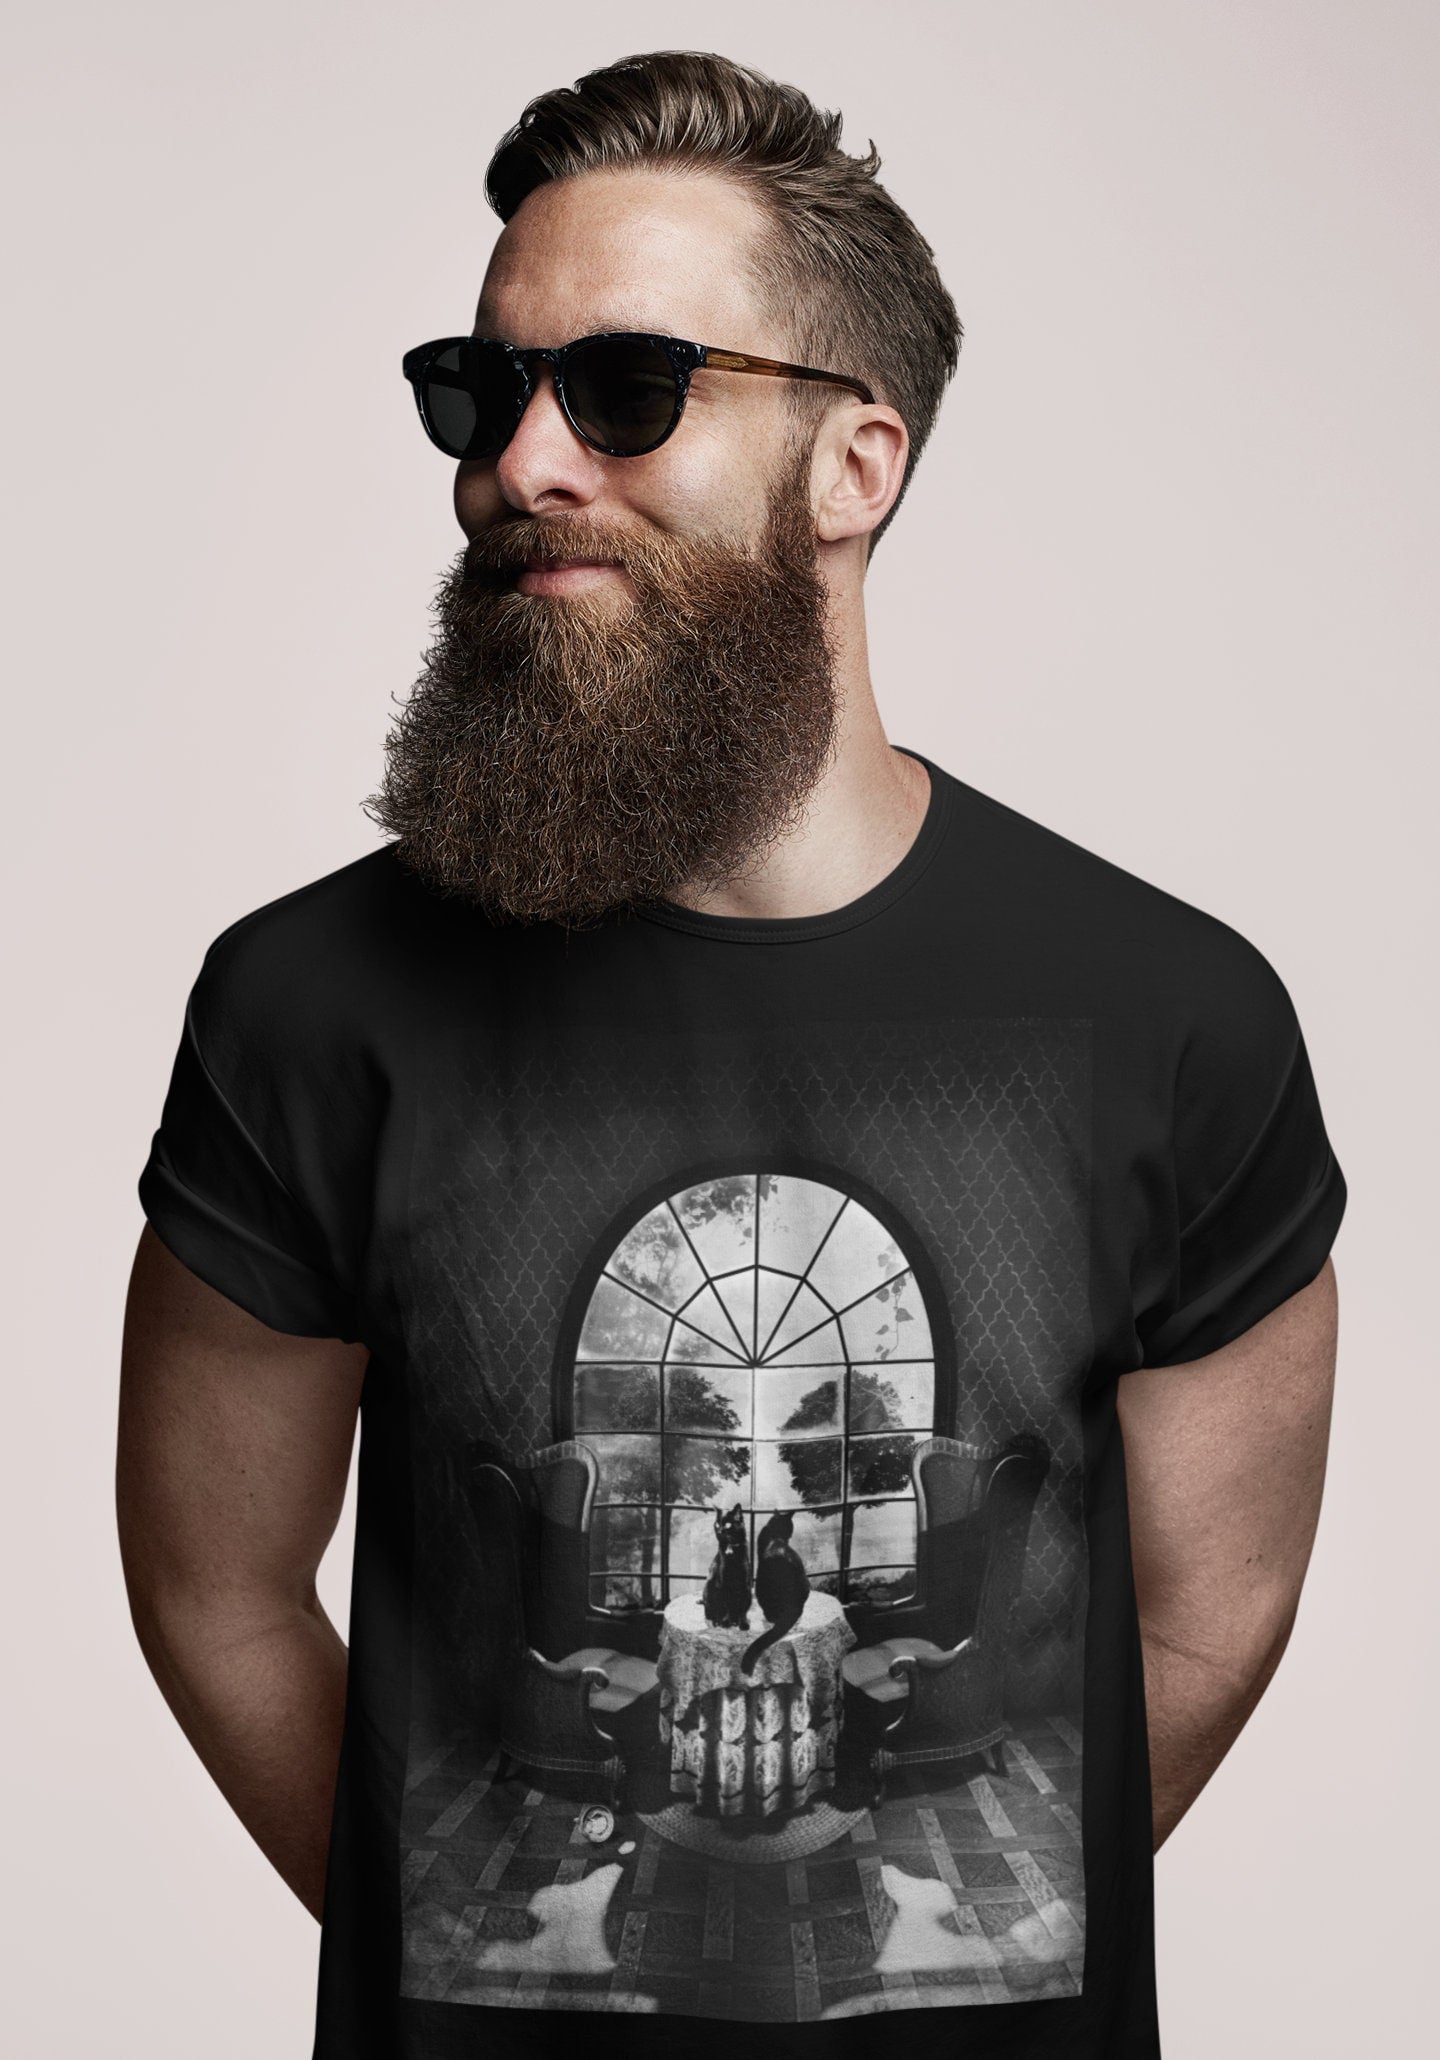 Skull Mens T-shirt, Black And White Mens T shirt, Gothic Skull Gift For Him, Skull Illusion Art Tshirt, Bella Canvas Skull Shirt Gift